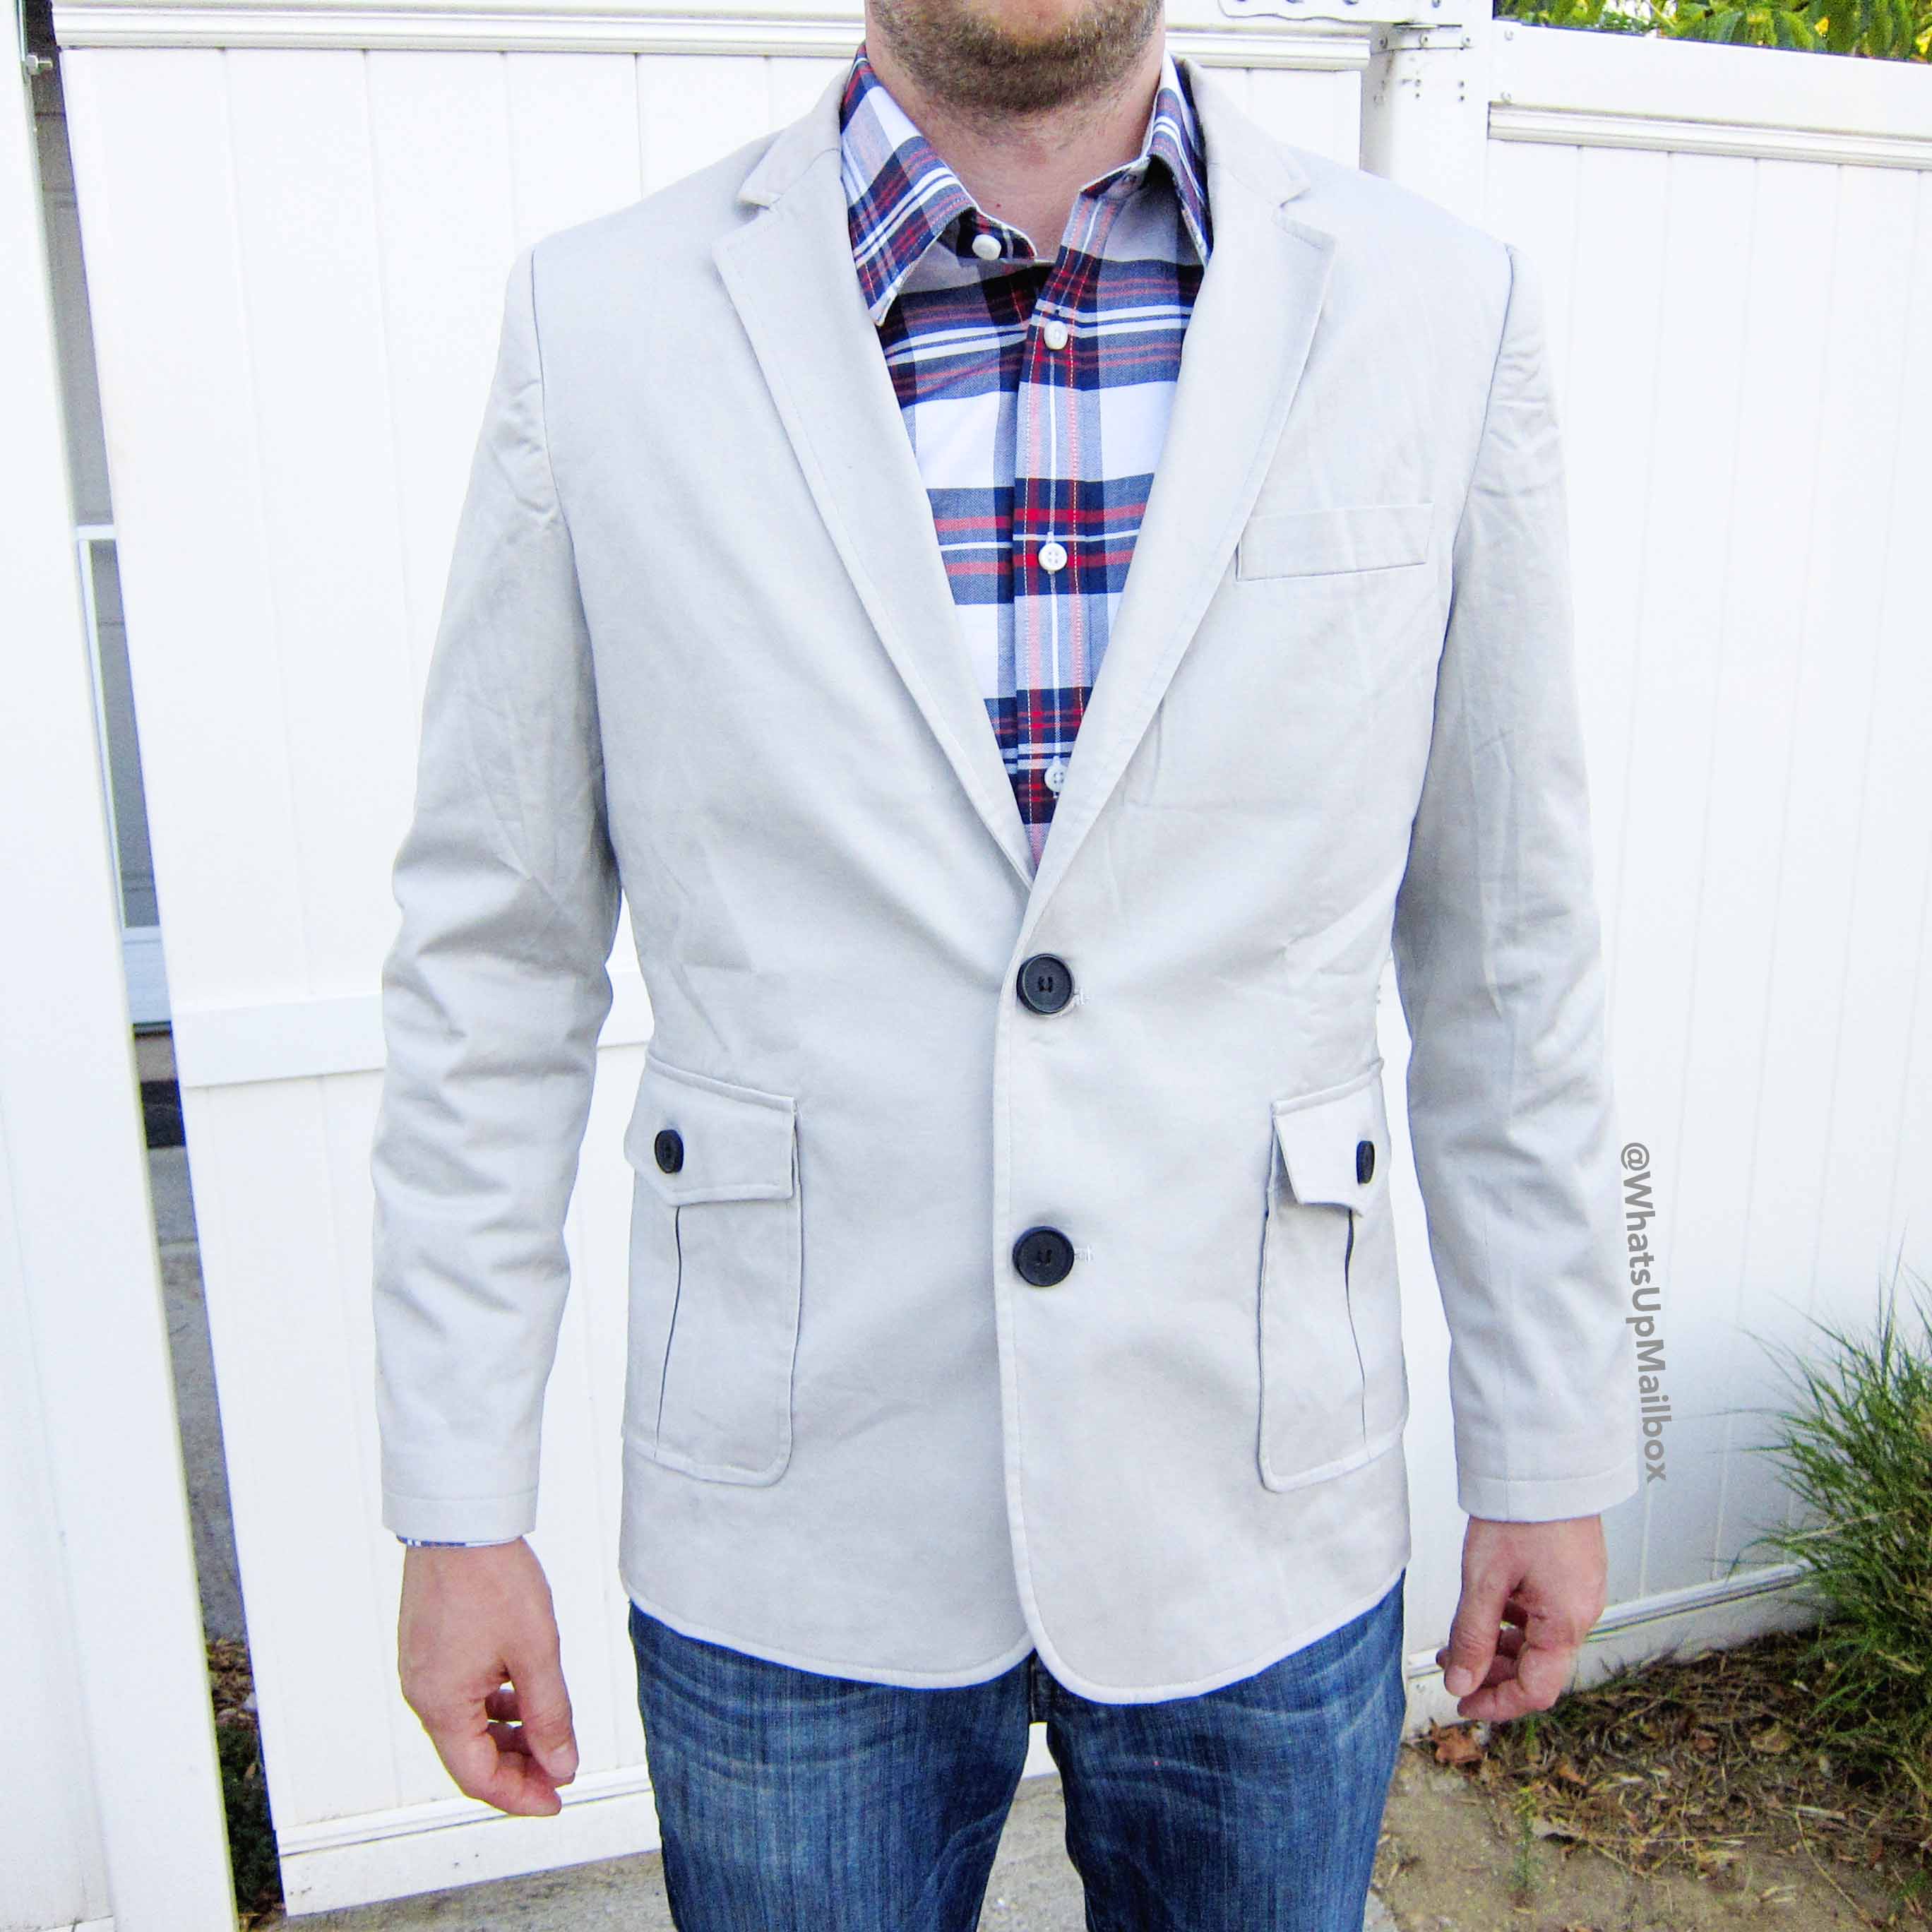 Trendy Butler - Standard Issue NYC Khaki Jacket